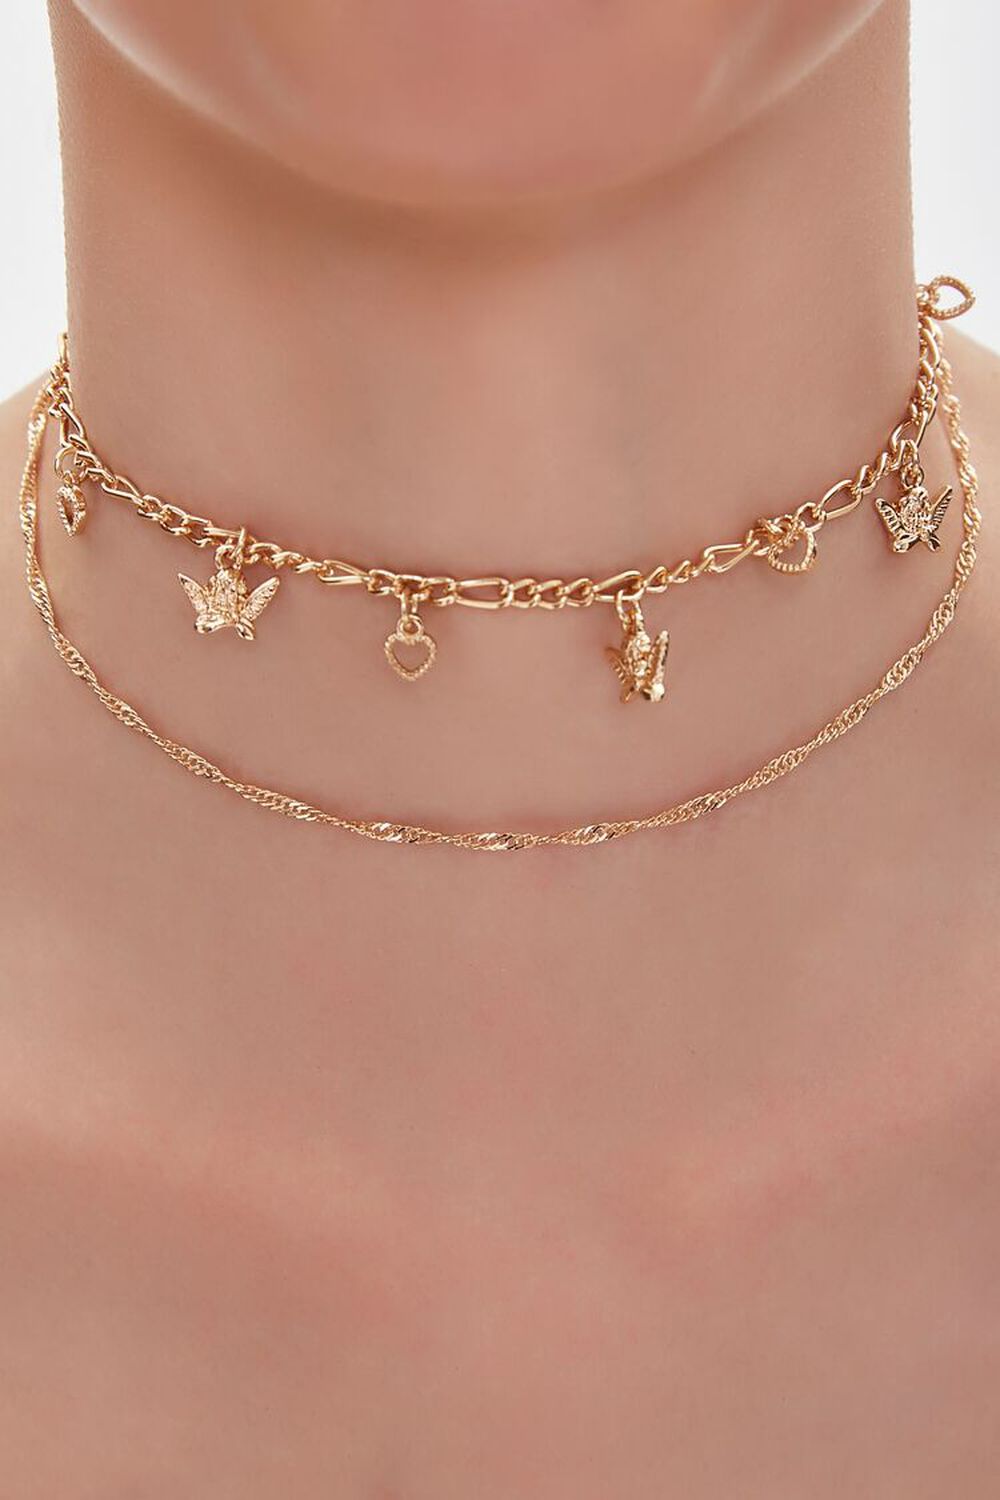 GOLD Cherub Charm Chain Choker Necklace, image 1